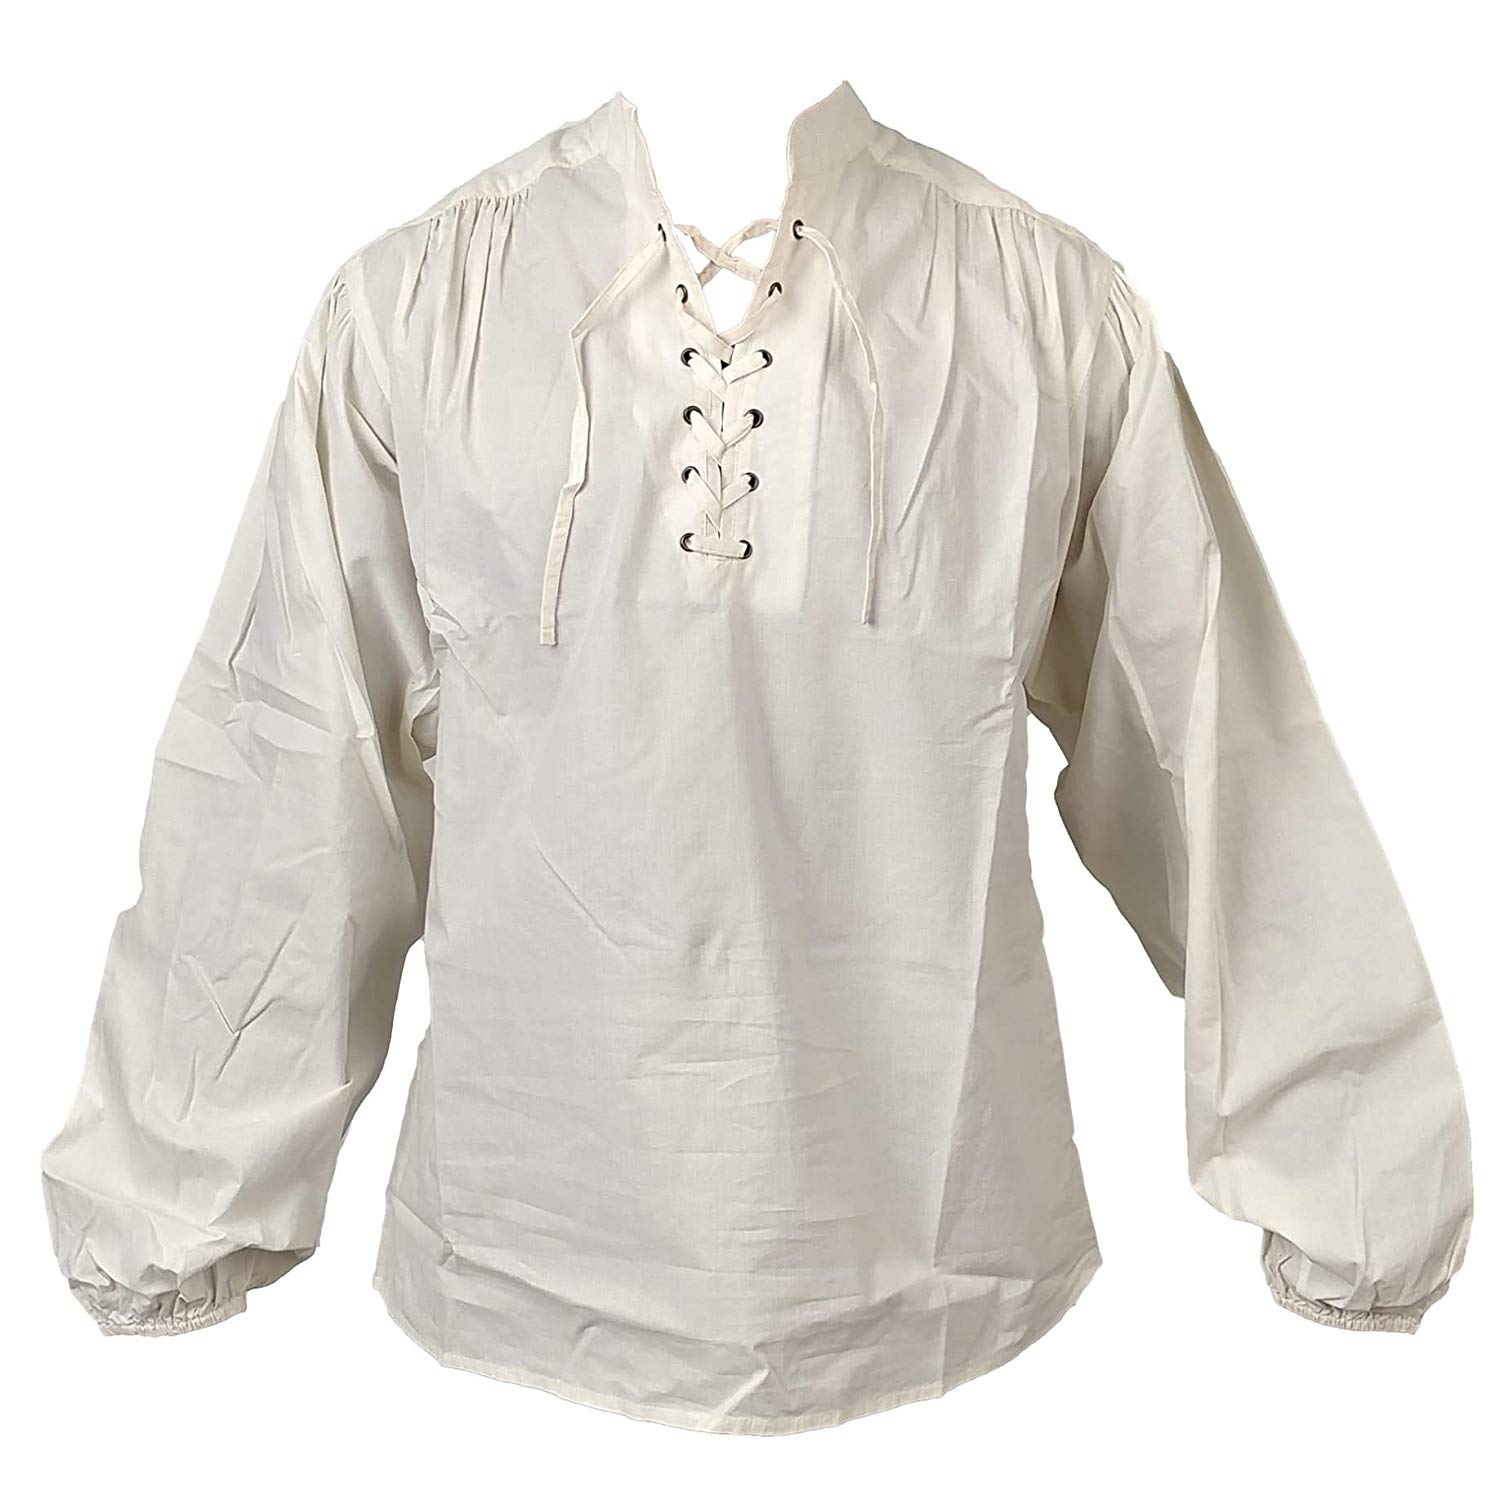 Period Cotton Shirt, Natural, Size M